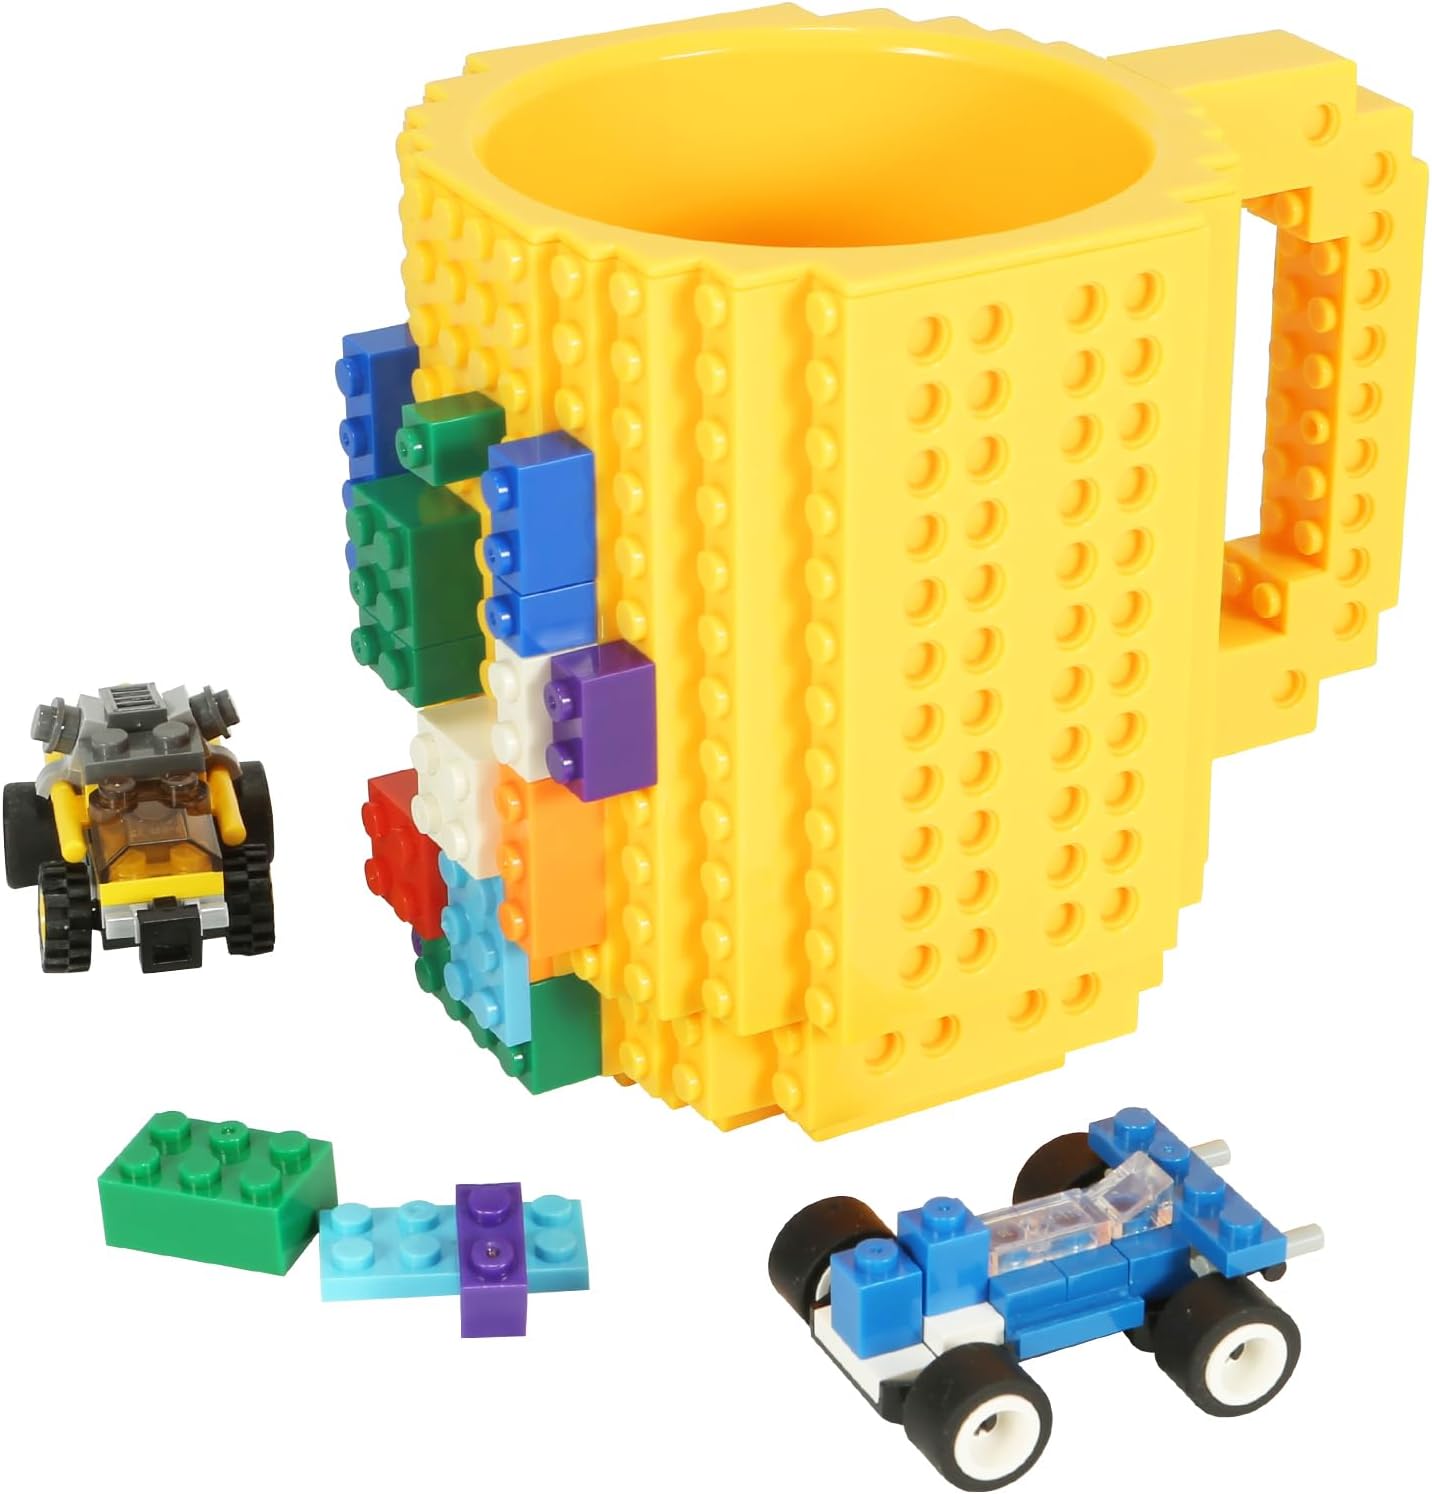 Brick Coffee Mug - Building Blocks For Creativity And Fun